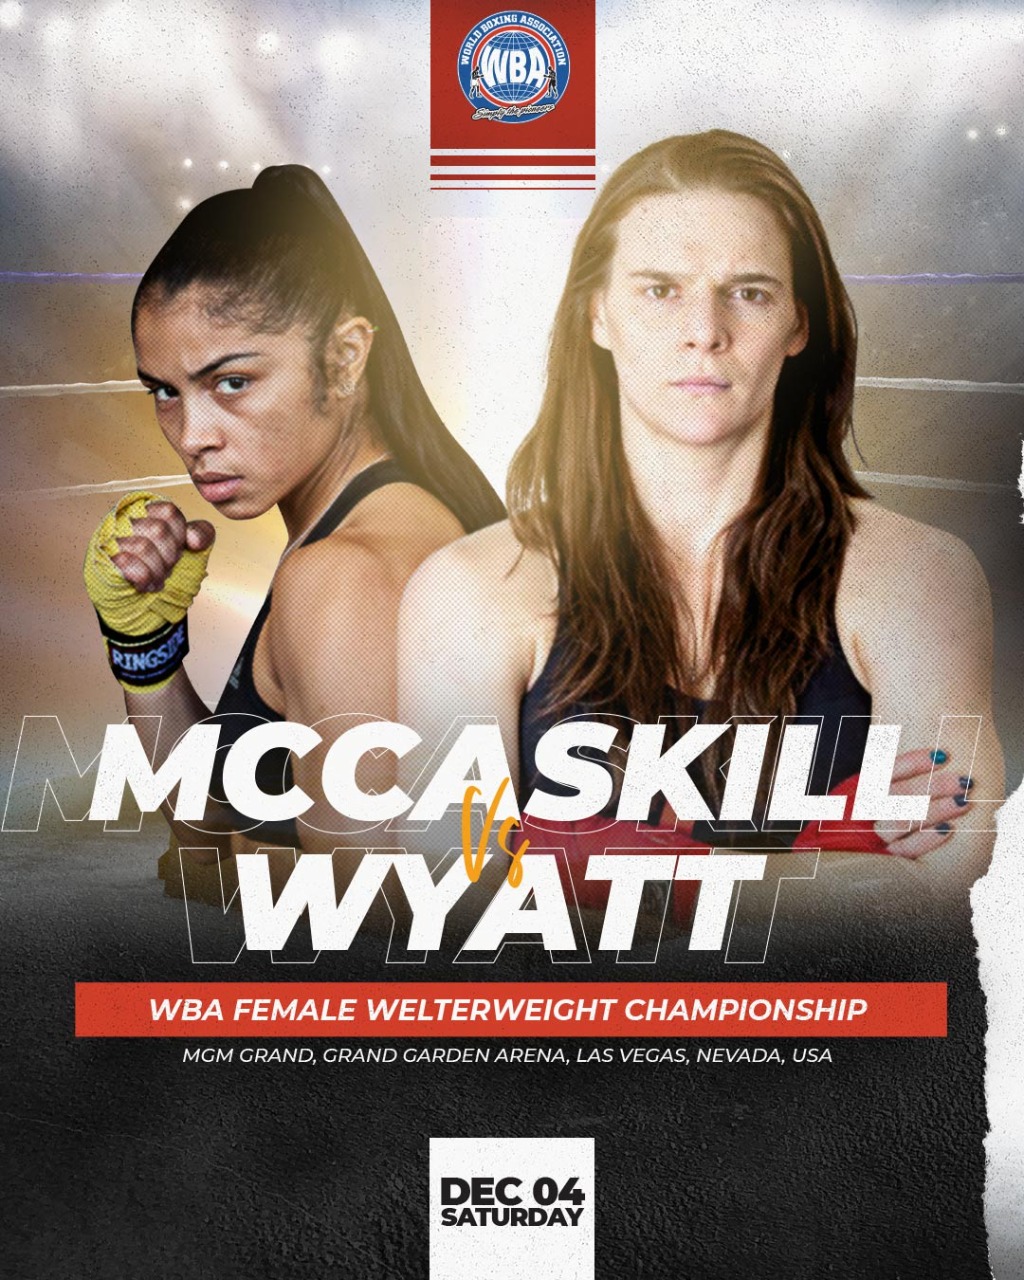 Wyatt will be McCaskill’s opponent on Saturday